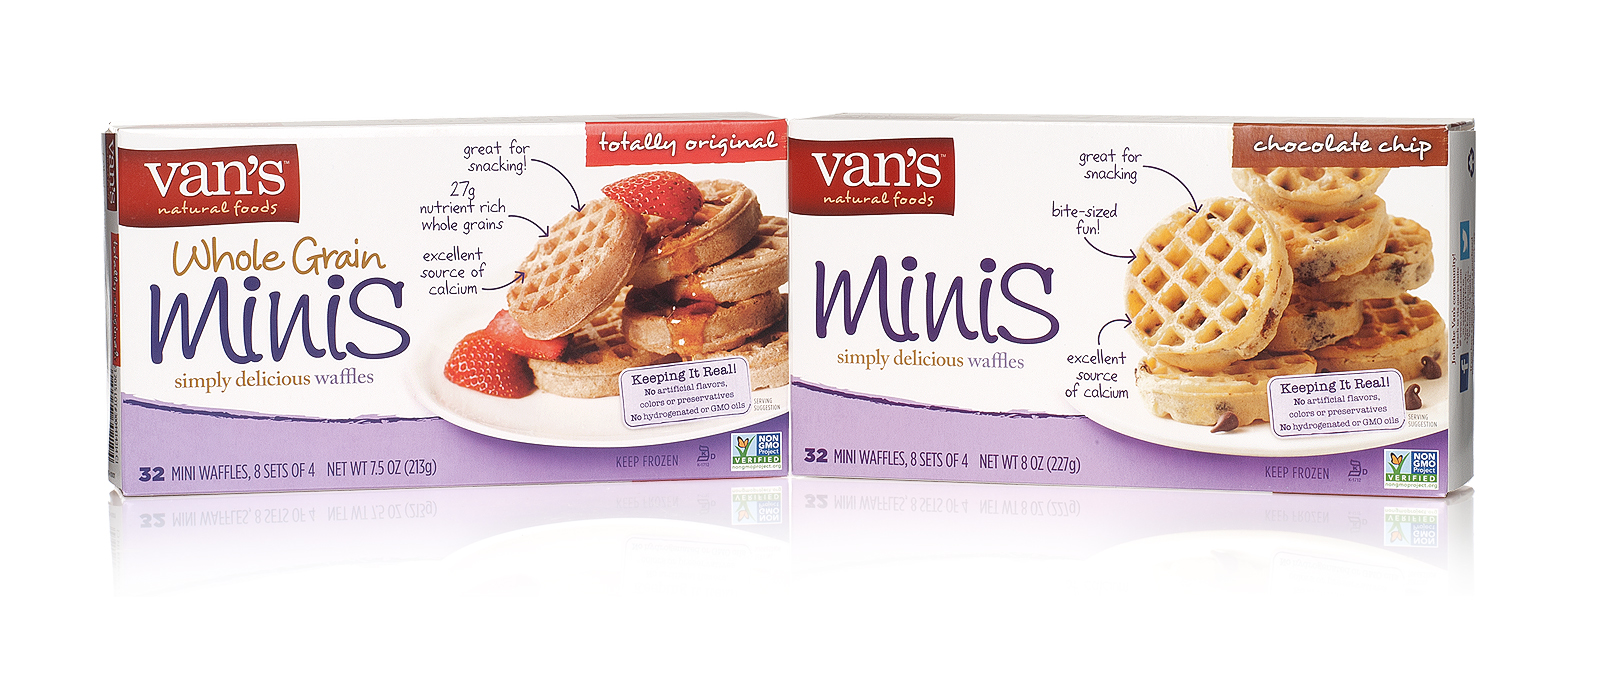 Van's Natural Foods | CMA Design